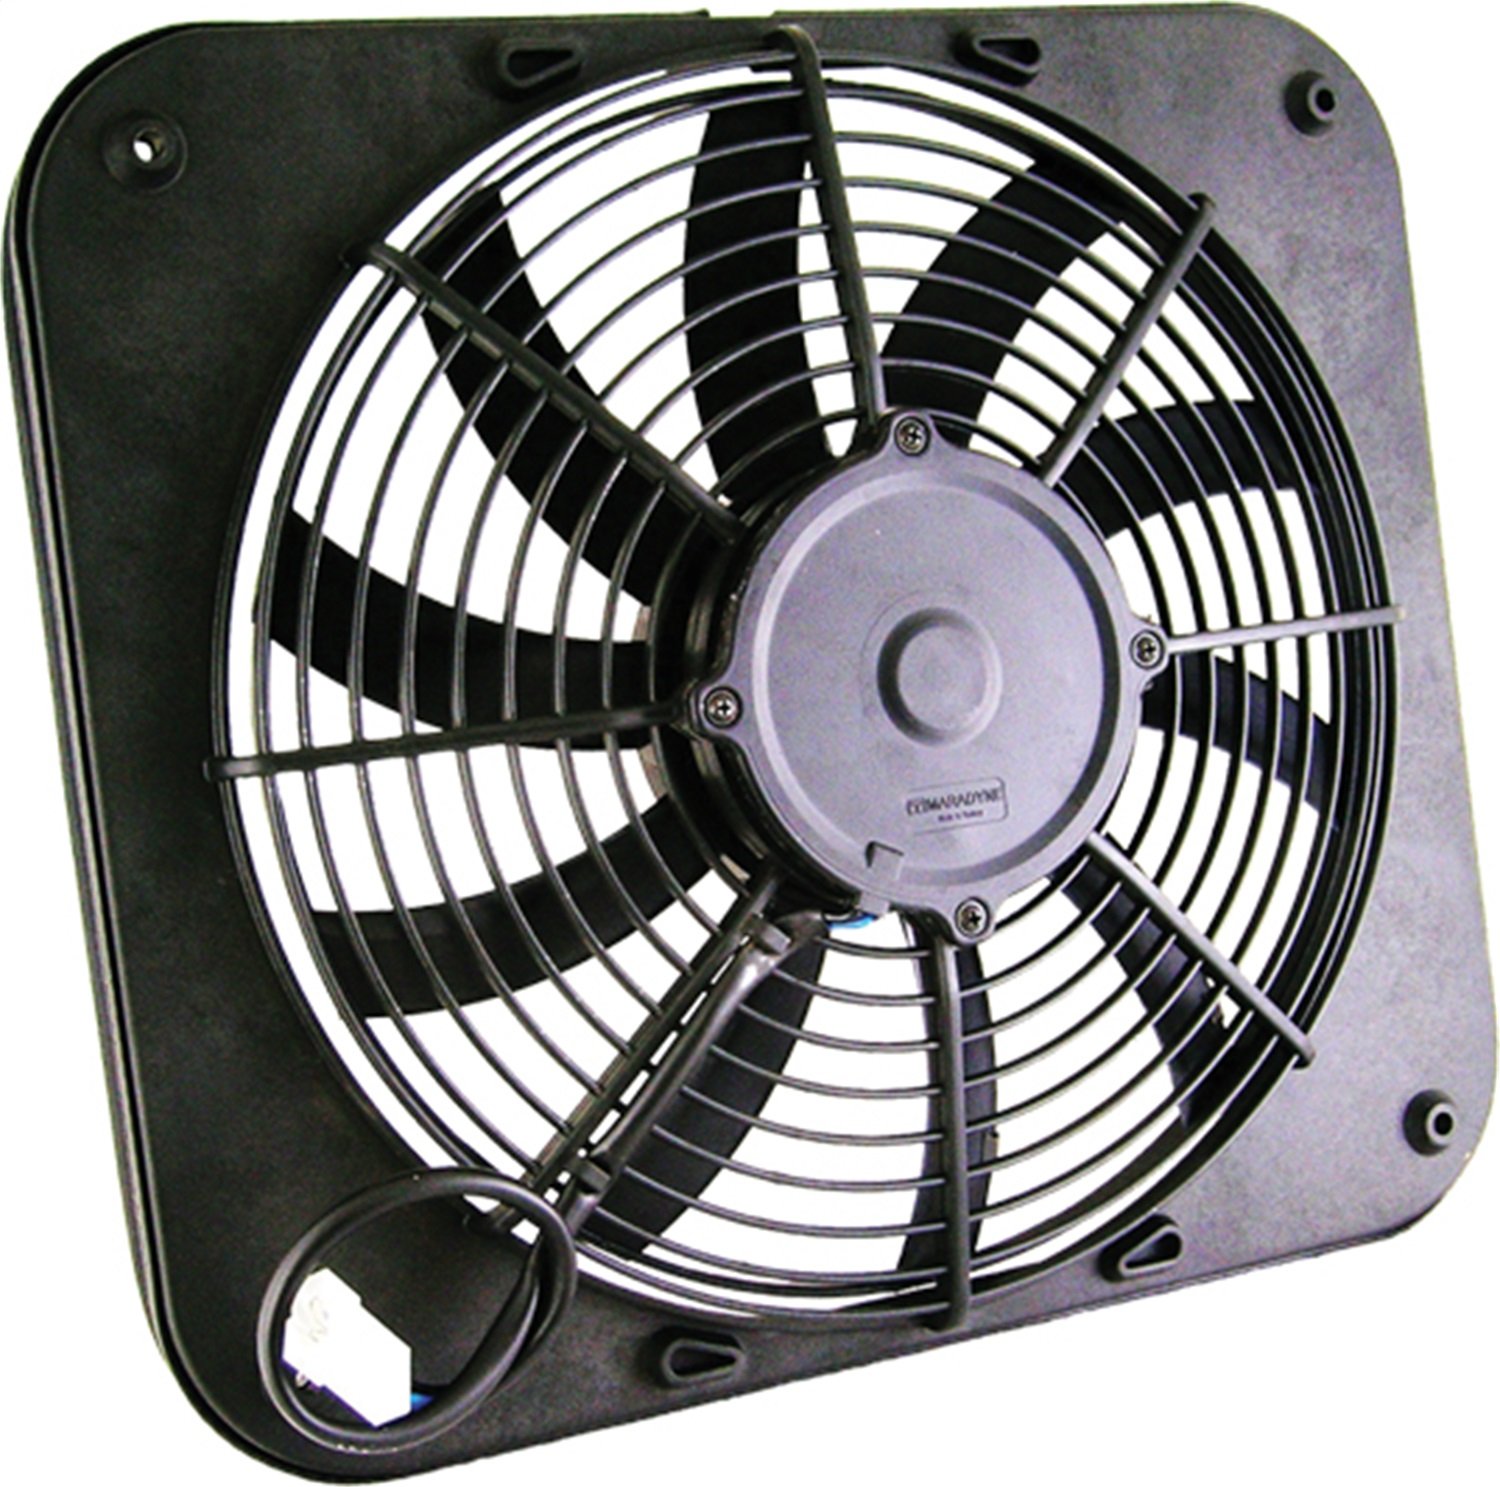 Jetstreme I Series Electric Cooling Fan, Diameter: 16 in., Type: Single